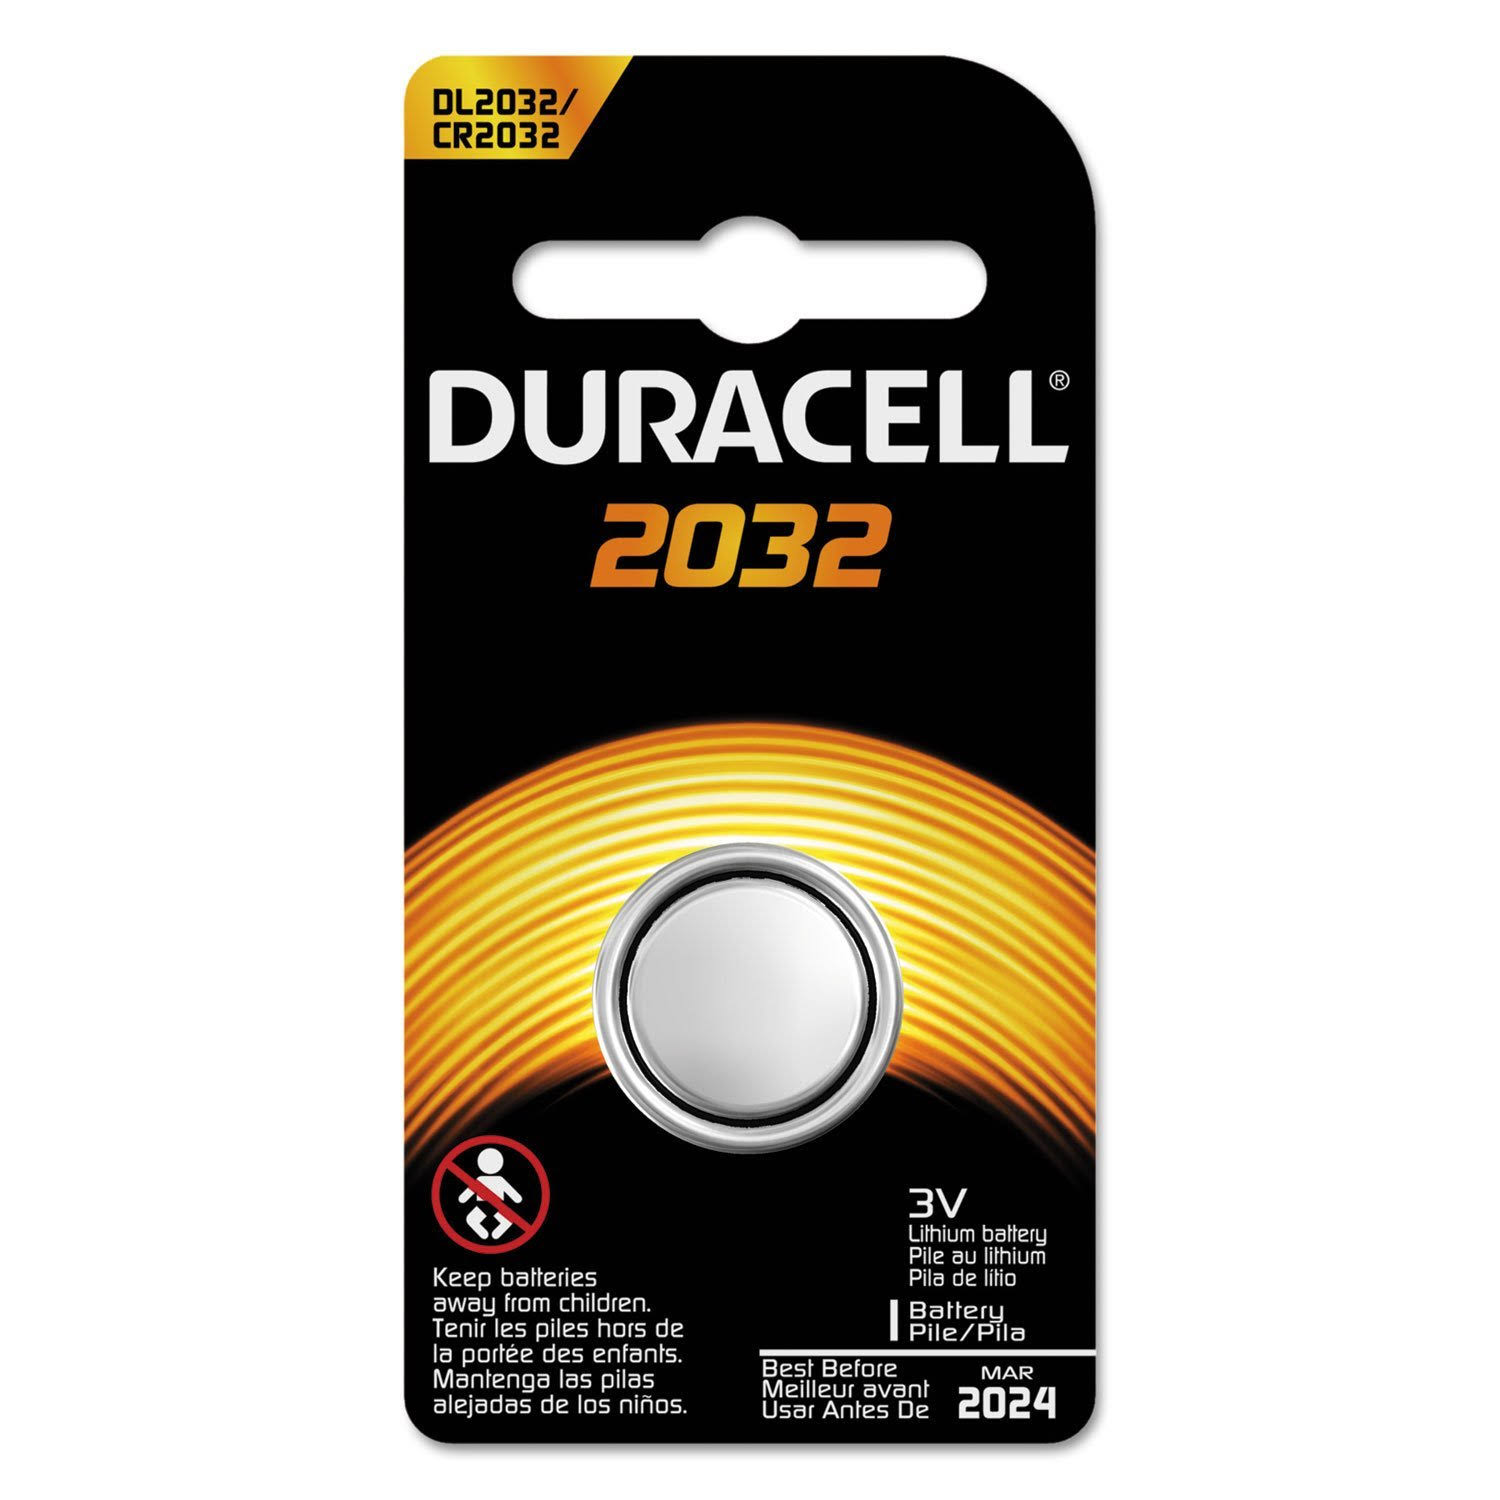 Duracell Medical 2032 Lithium Battery - 3V